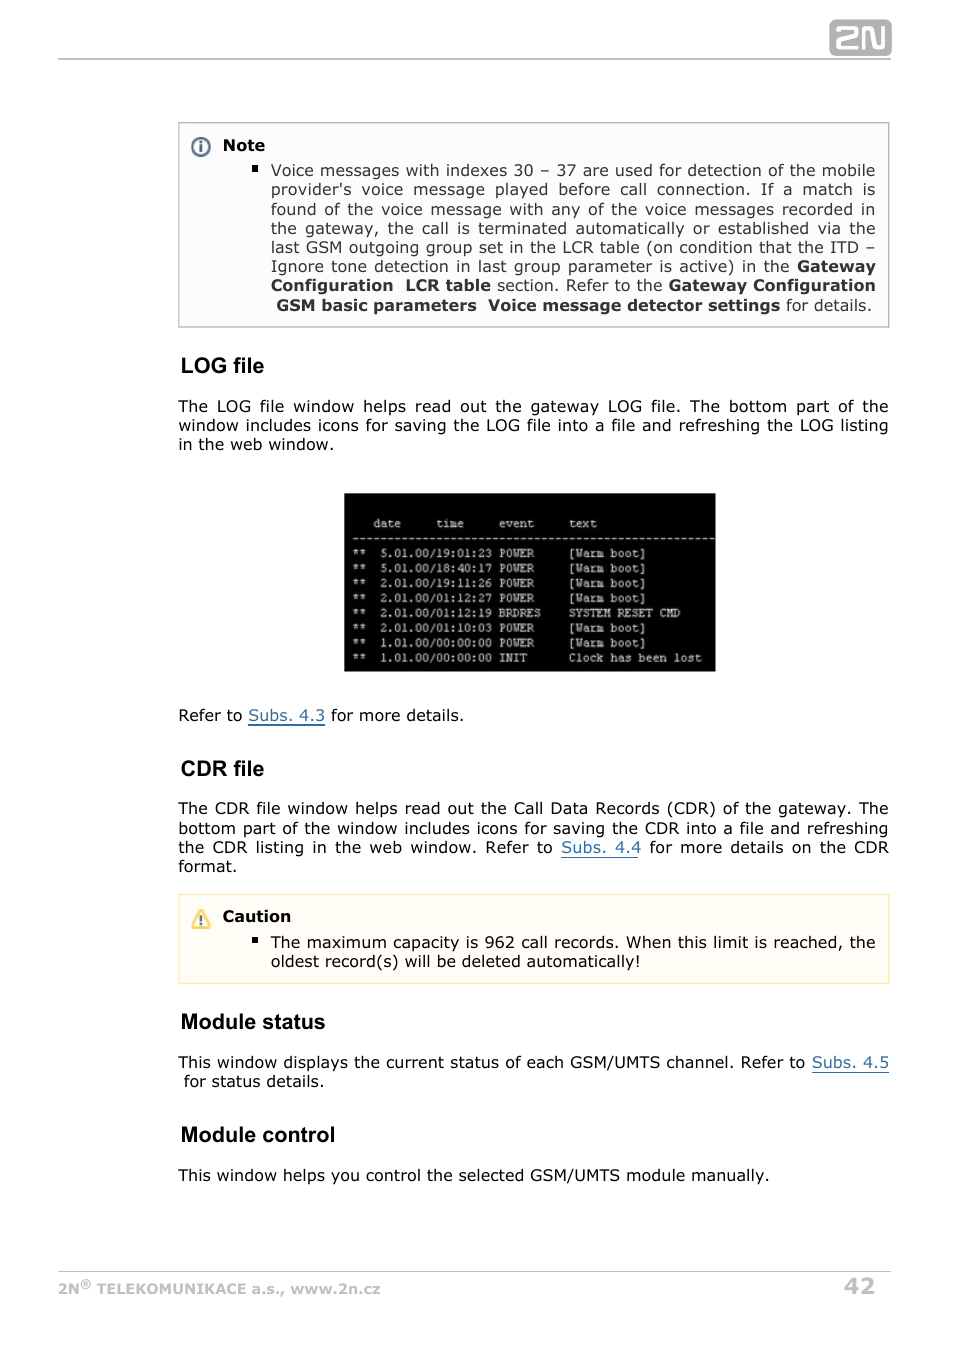 Log file, Cdr file, Module status | Module control | 2N VoiceBlue MAX v1.3 User Manual | Page 42 / 107